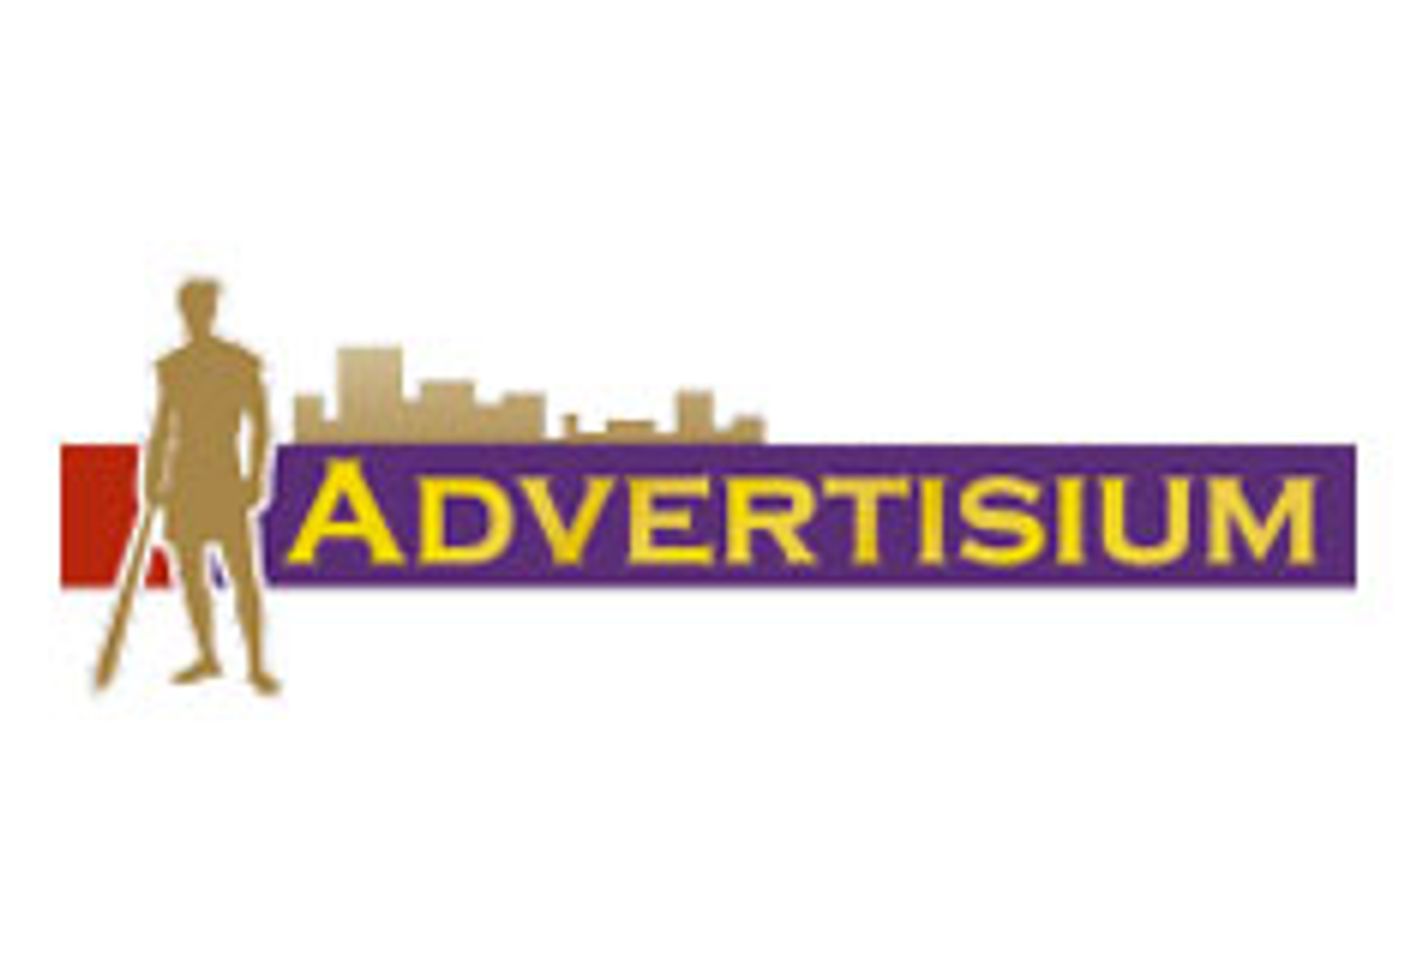 Advertisium Seeking Adult Industry Clients